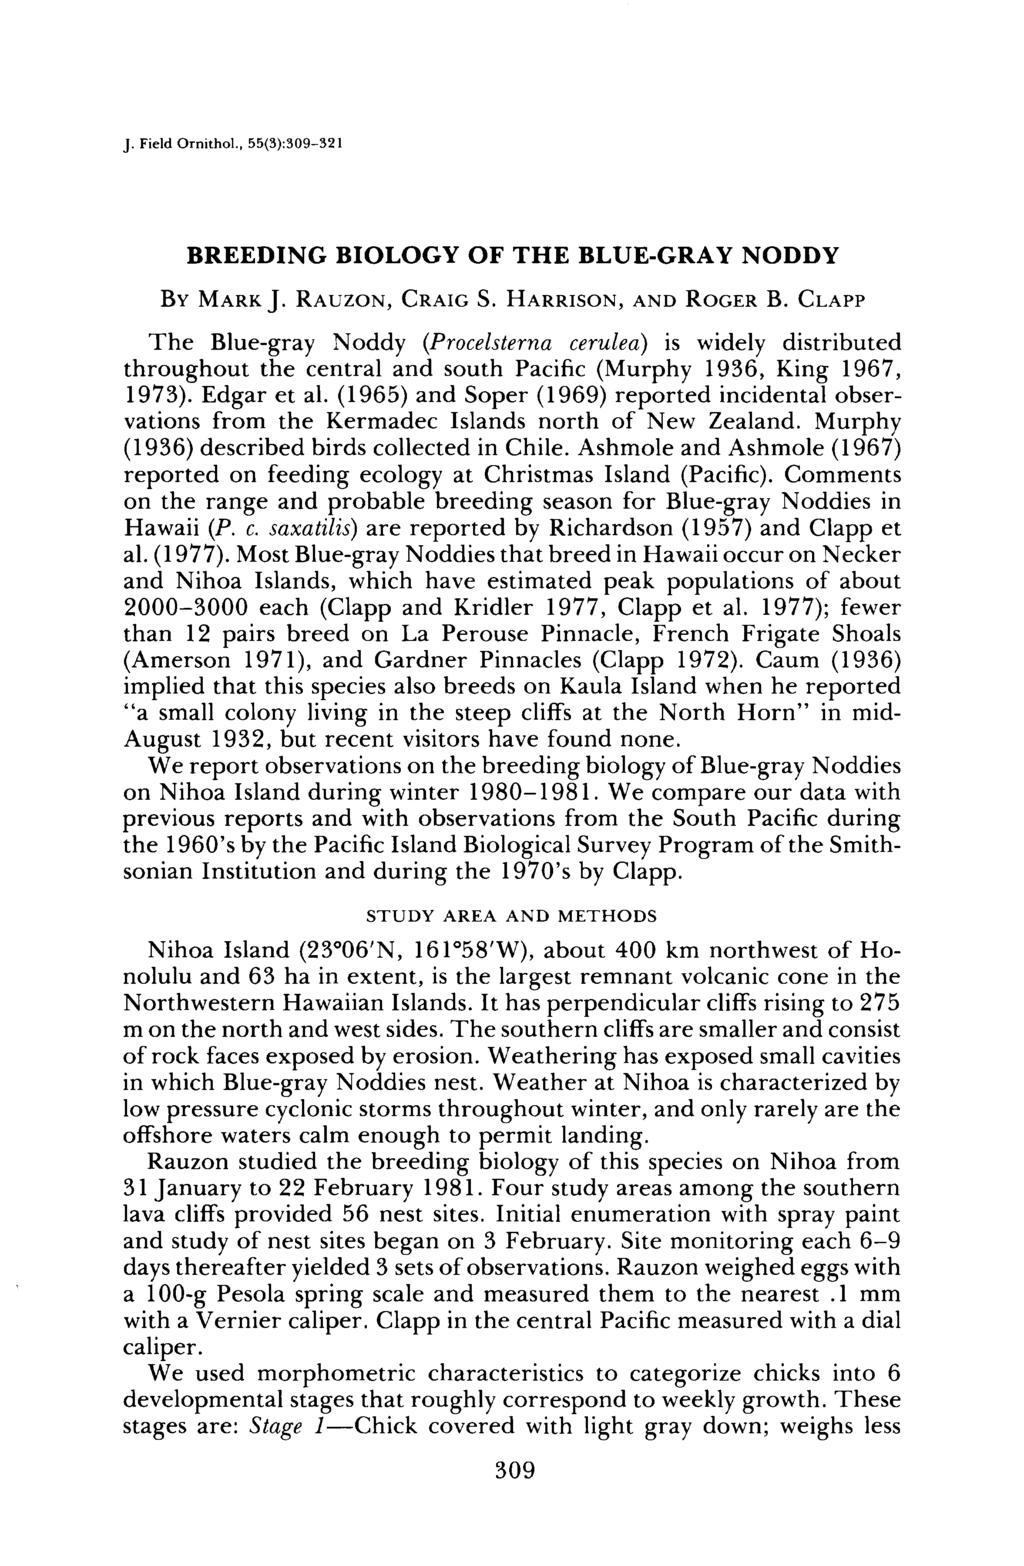 j. Field Ornithol., 55(3):309-321 BREEDING BIOLOGY OF THE BLUE-GRAY NODDY BY MARK J. RAUZON, CRAIG S. HARRISON, AND ROCER B.